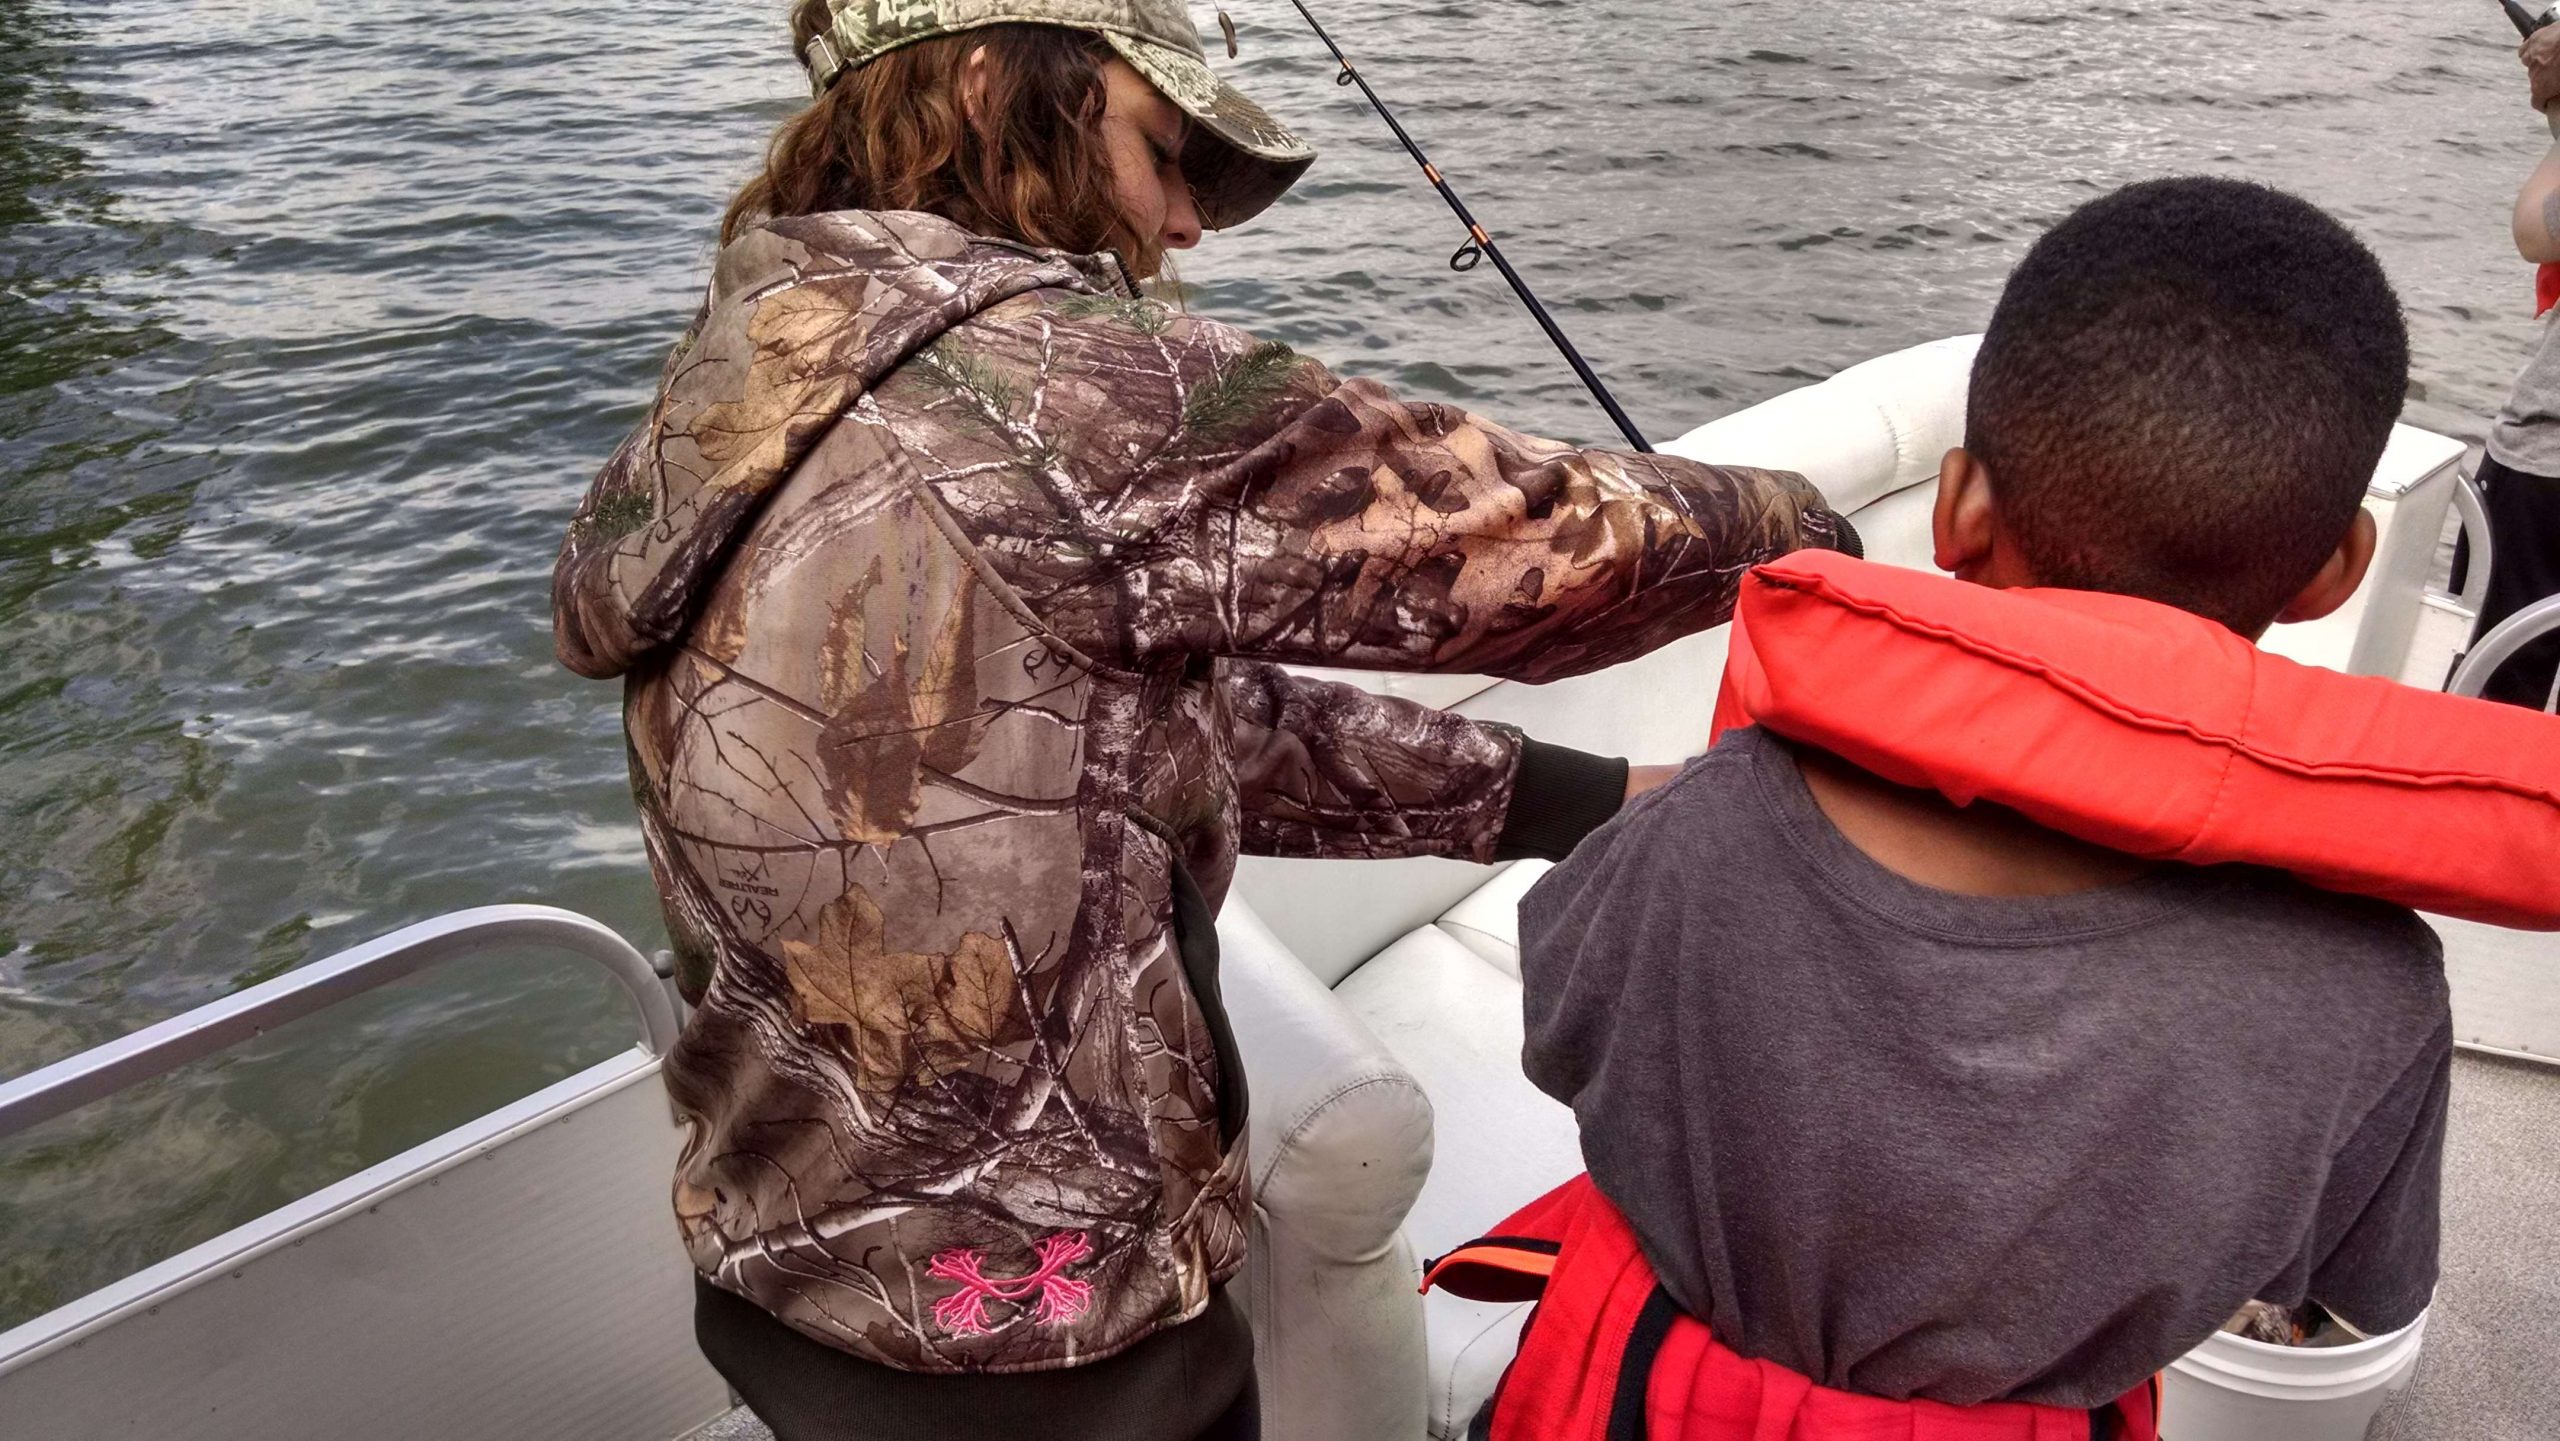 Nation volunteers take autistic kids fishing - Bassmaster